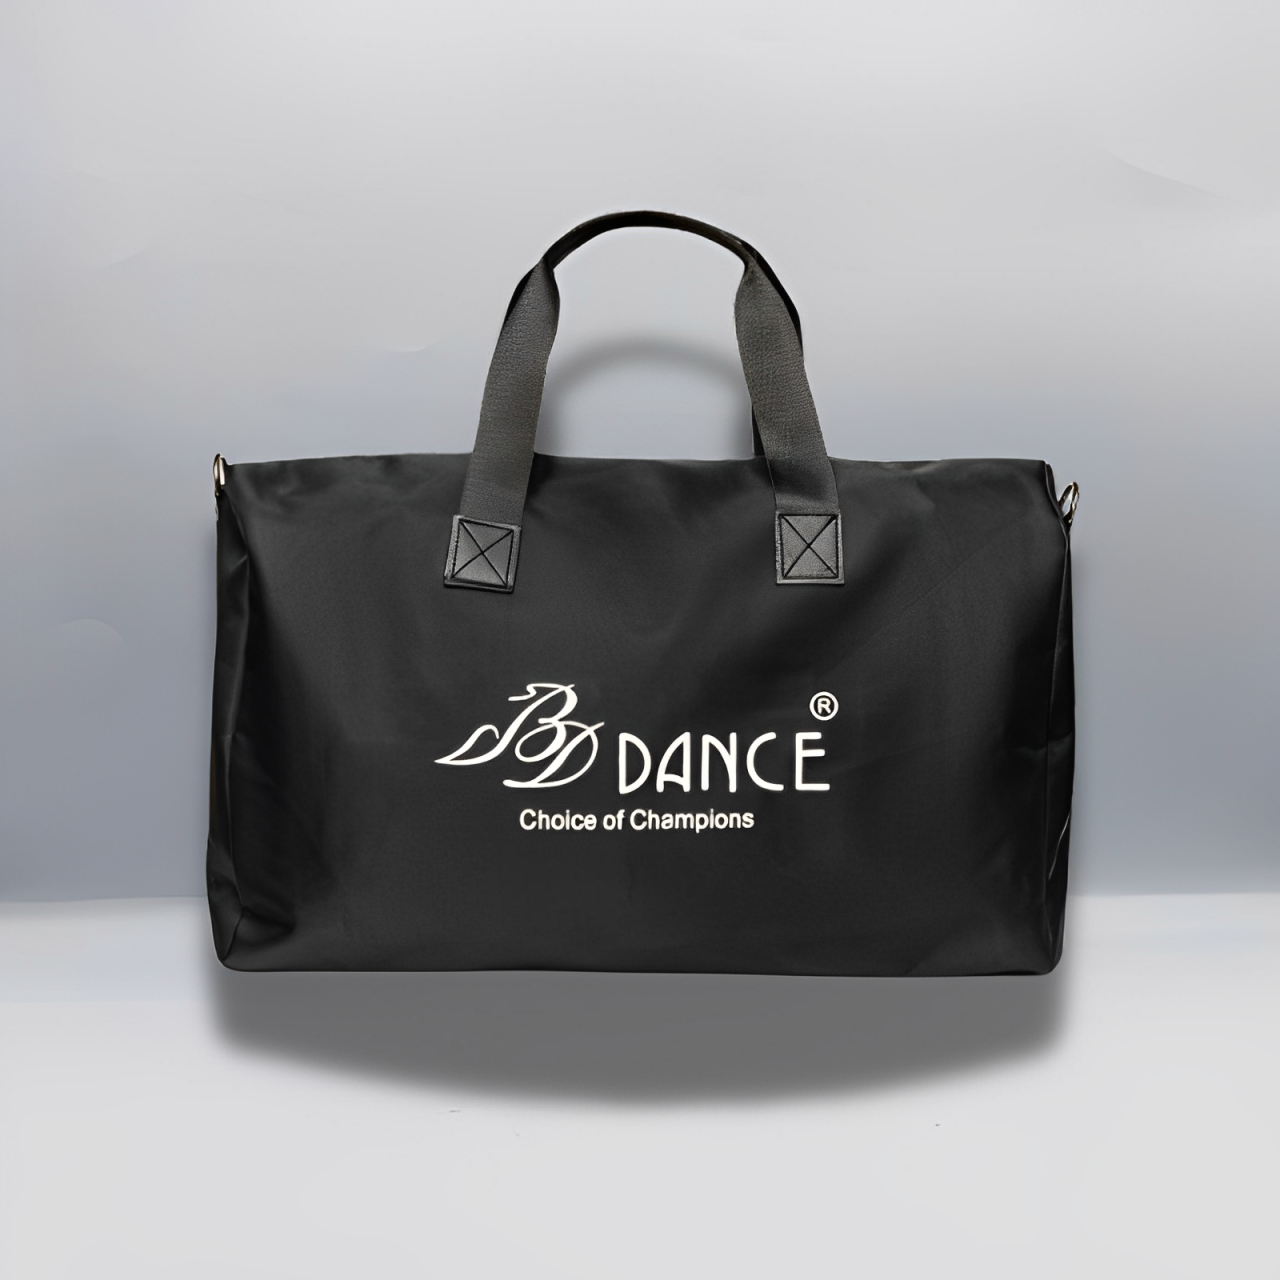 Traveling & Practice bag - BD DANCE